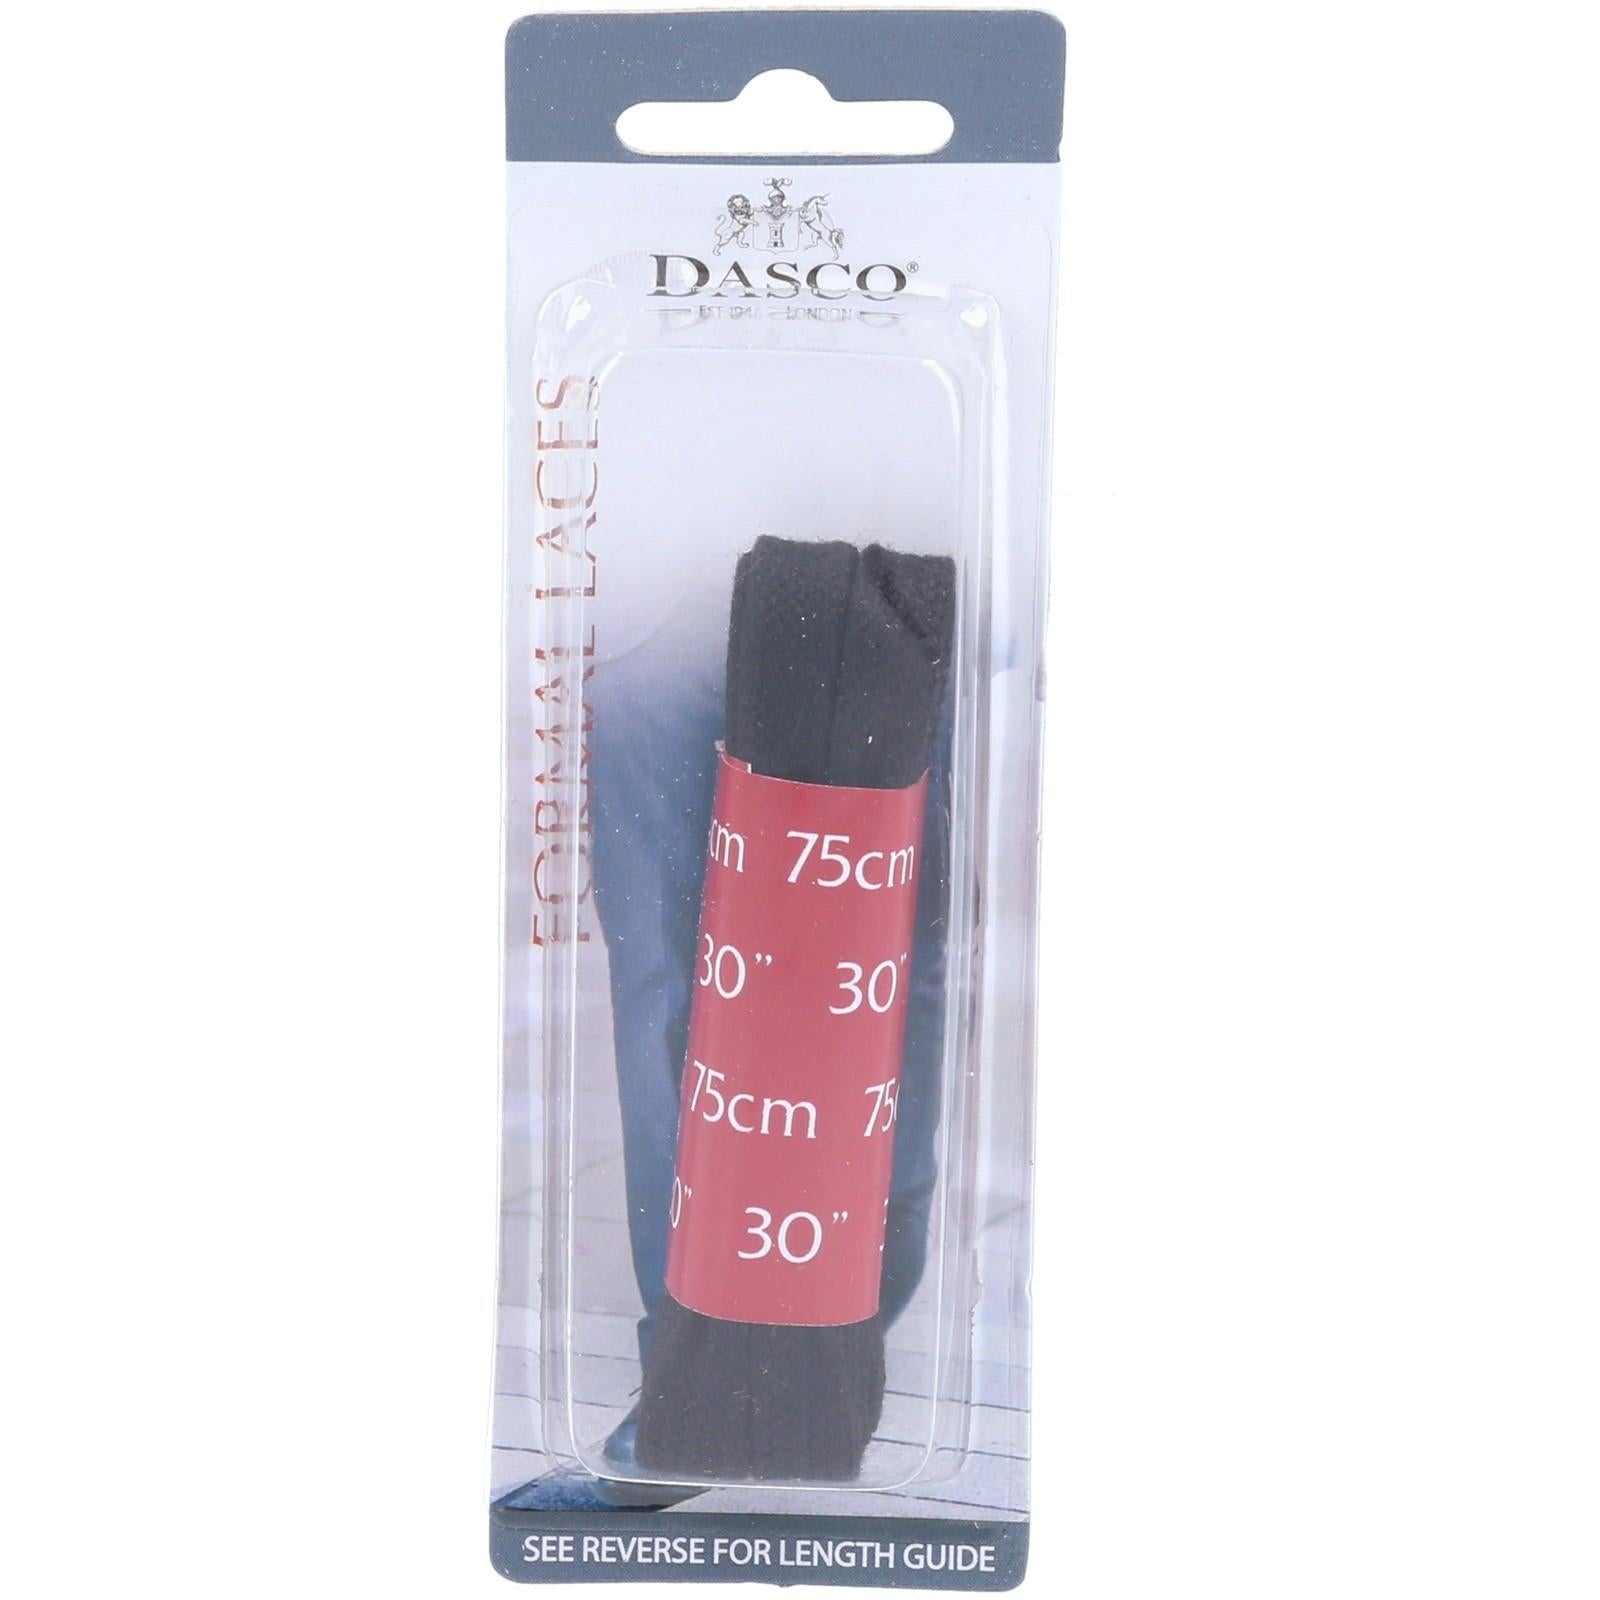 Dasco 75cm Flat Shoe Lace 6 Pack